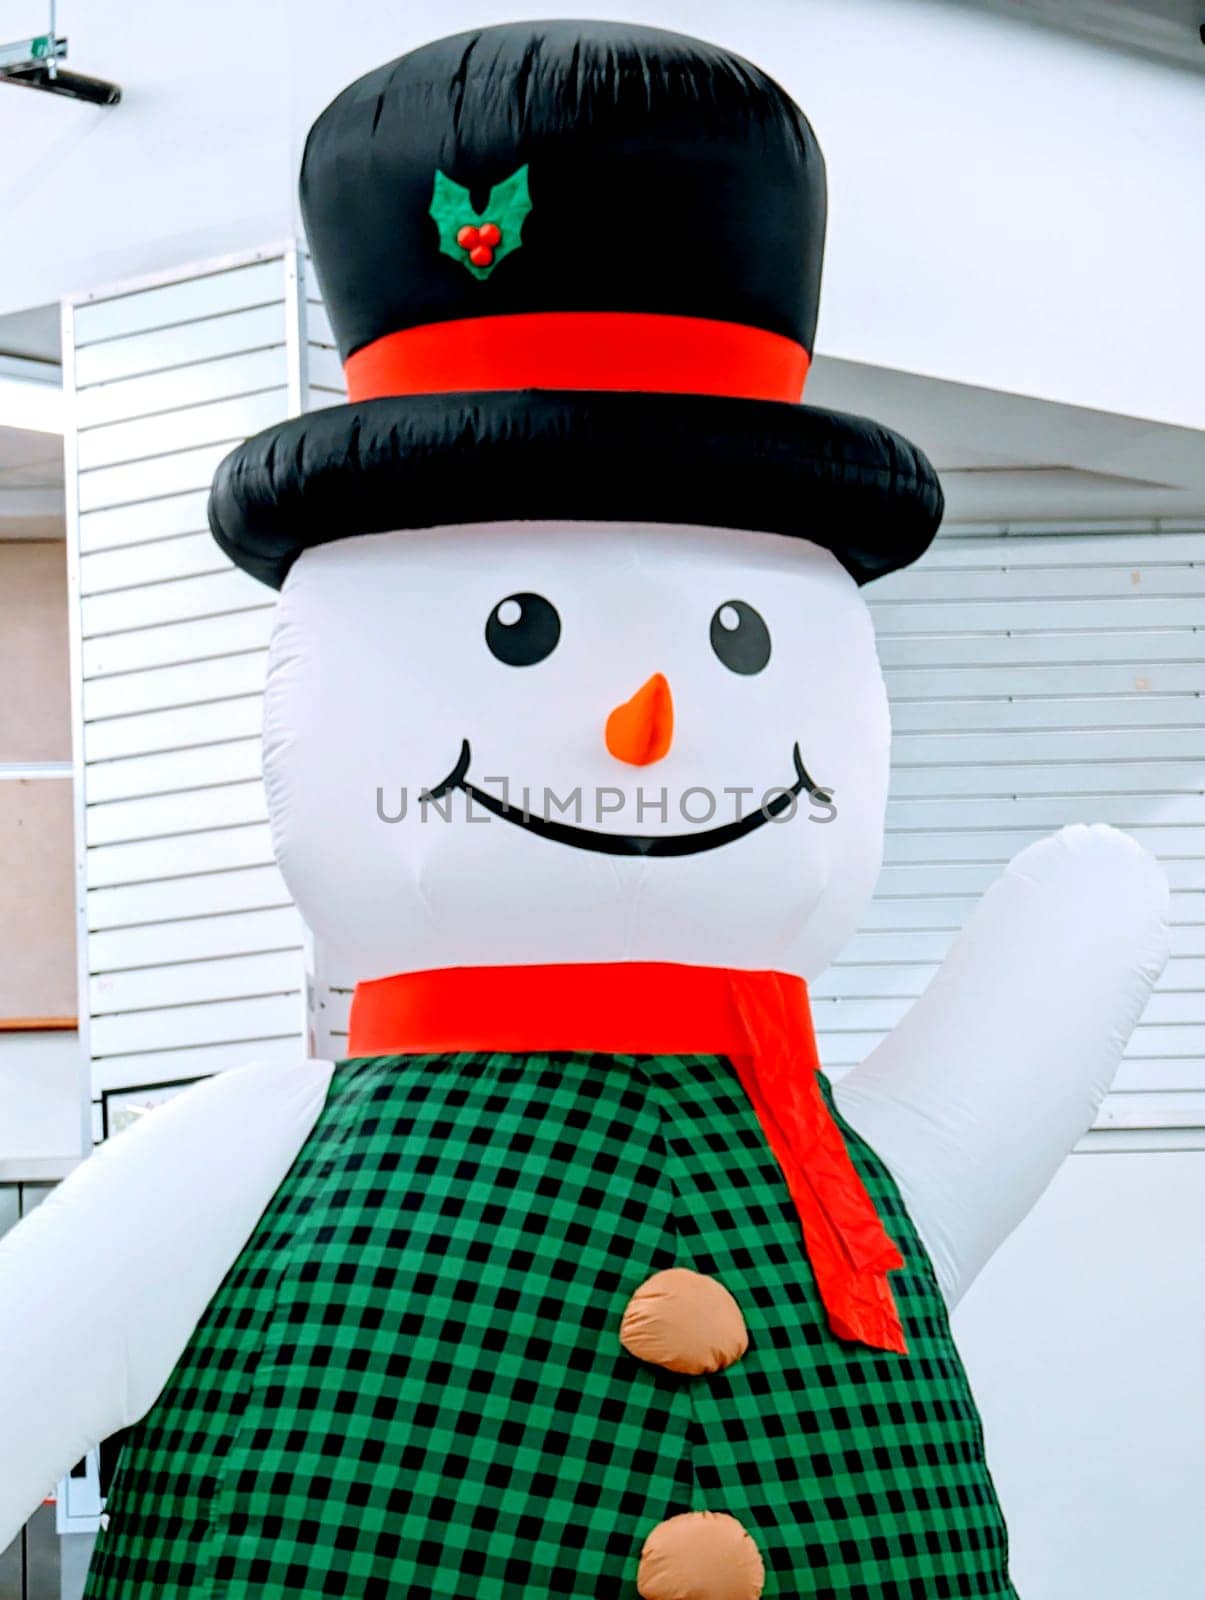 A Festive Inflatable Snowman Decoration by EricGBVD